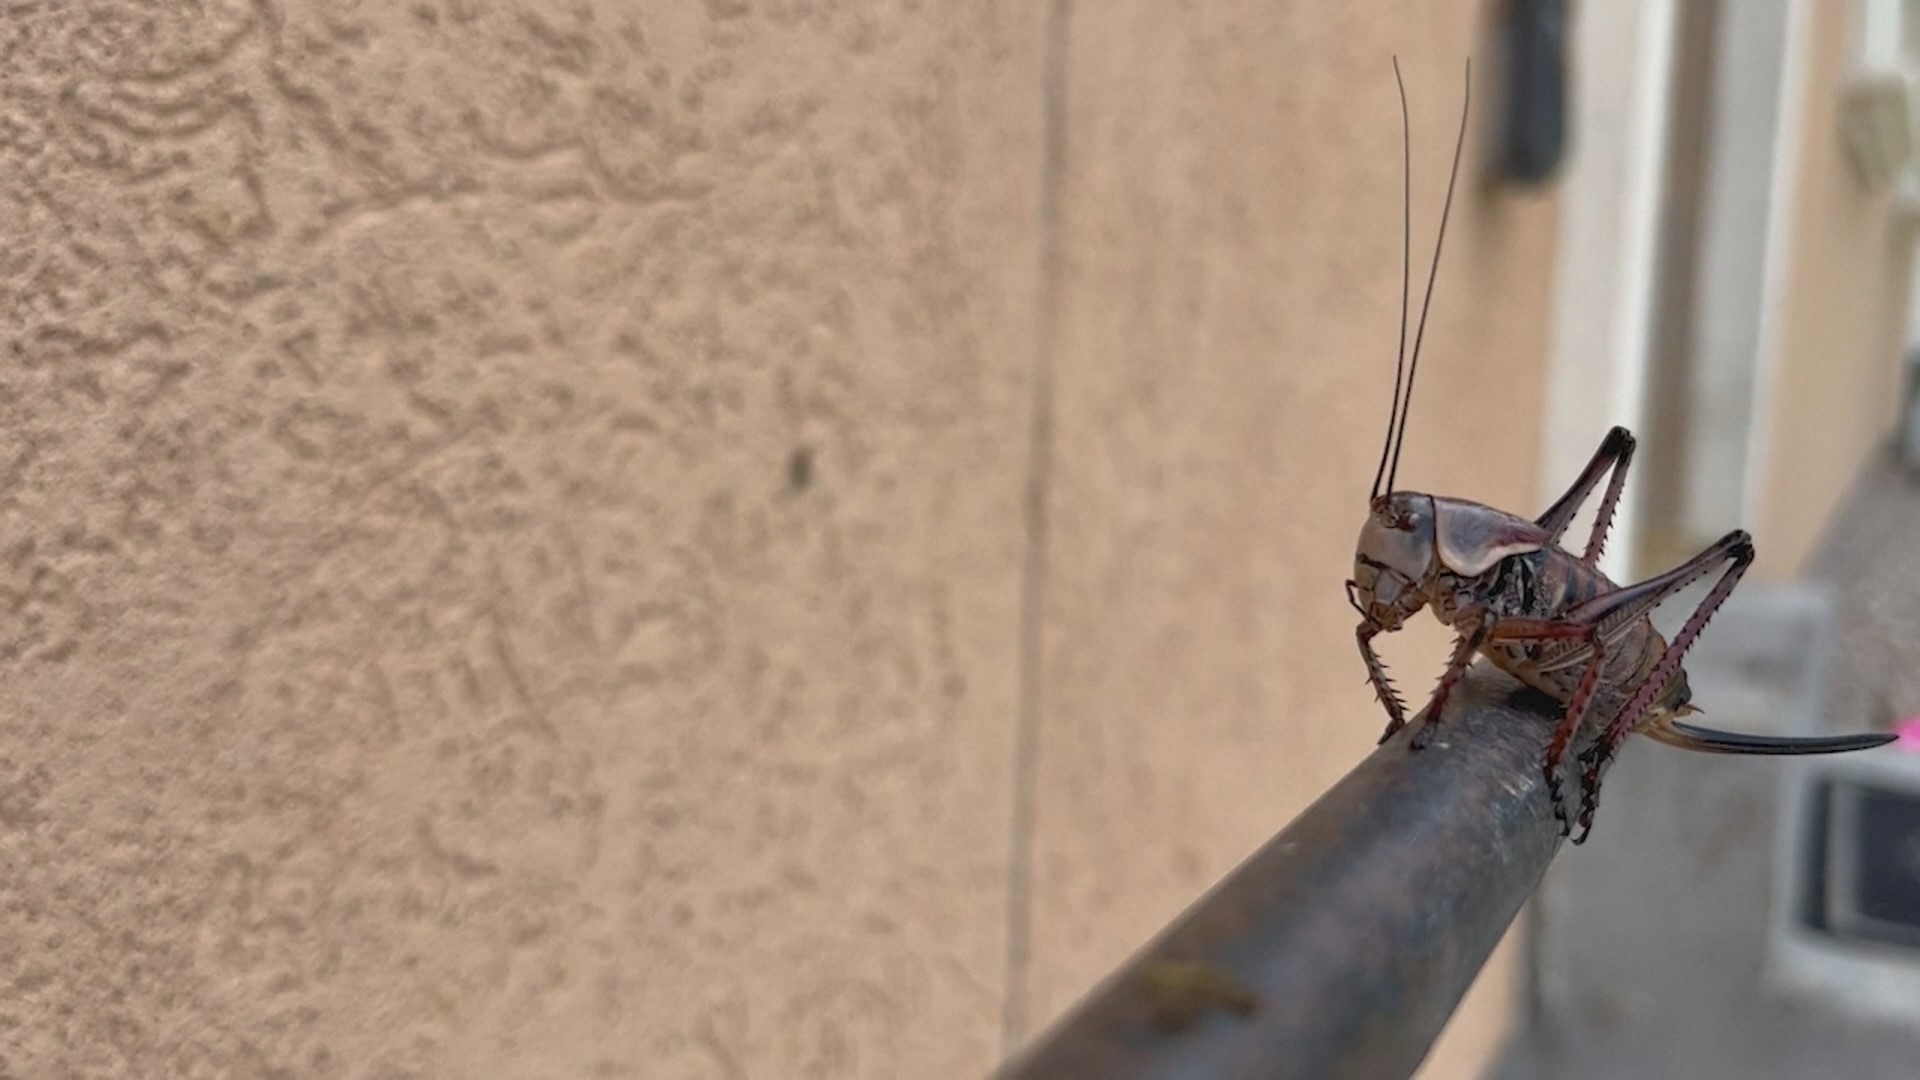 Millions of Mormon crickets invade Nevada city